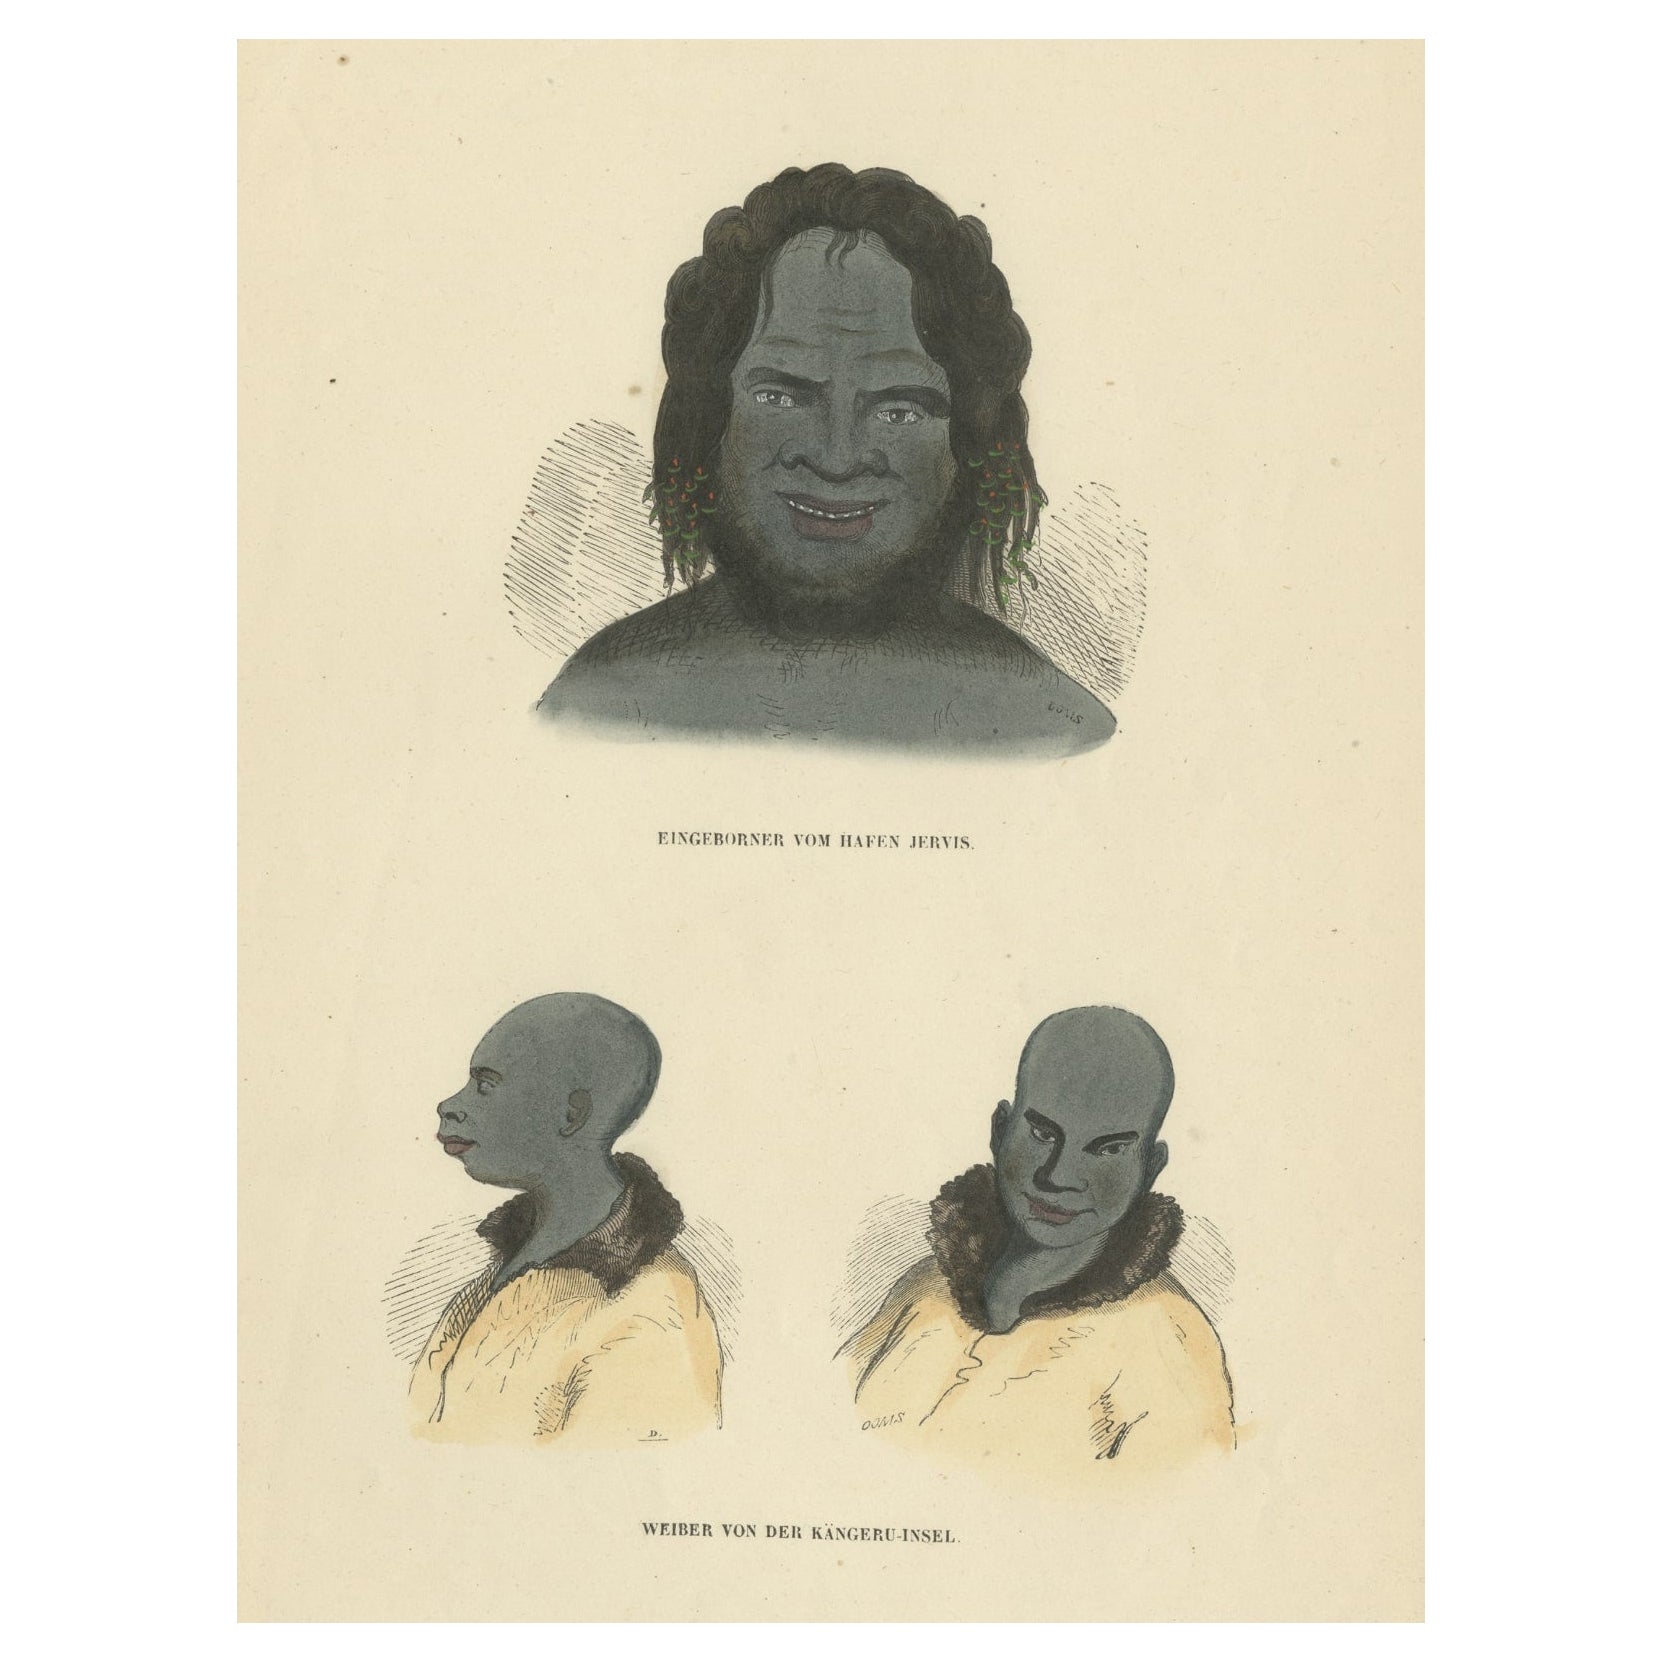 Original Antique Print of Natives from Jervis & Kangaroo Island, Australia, 1845